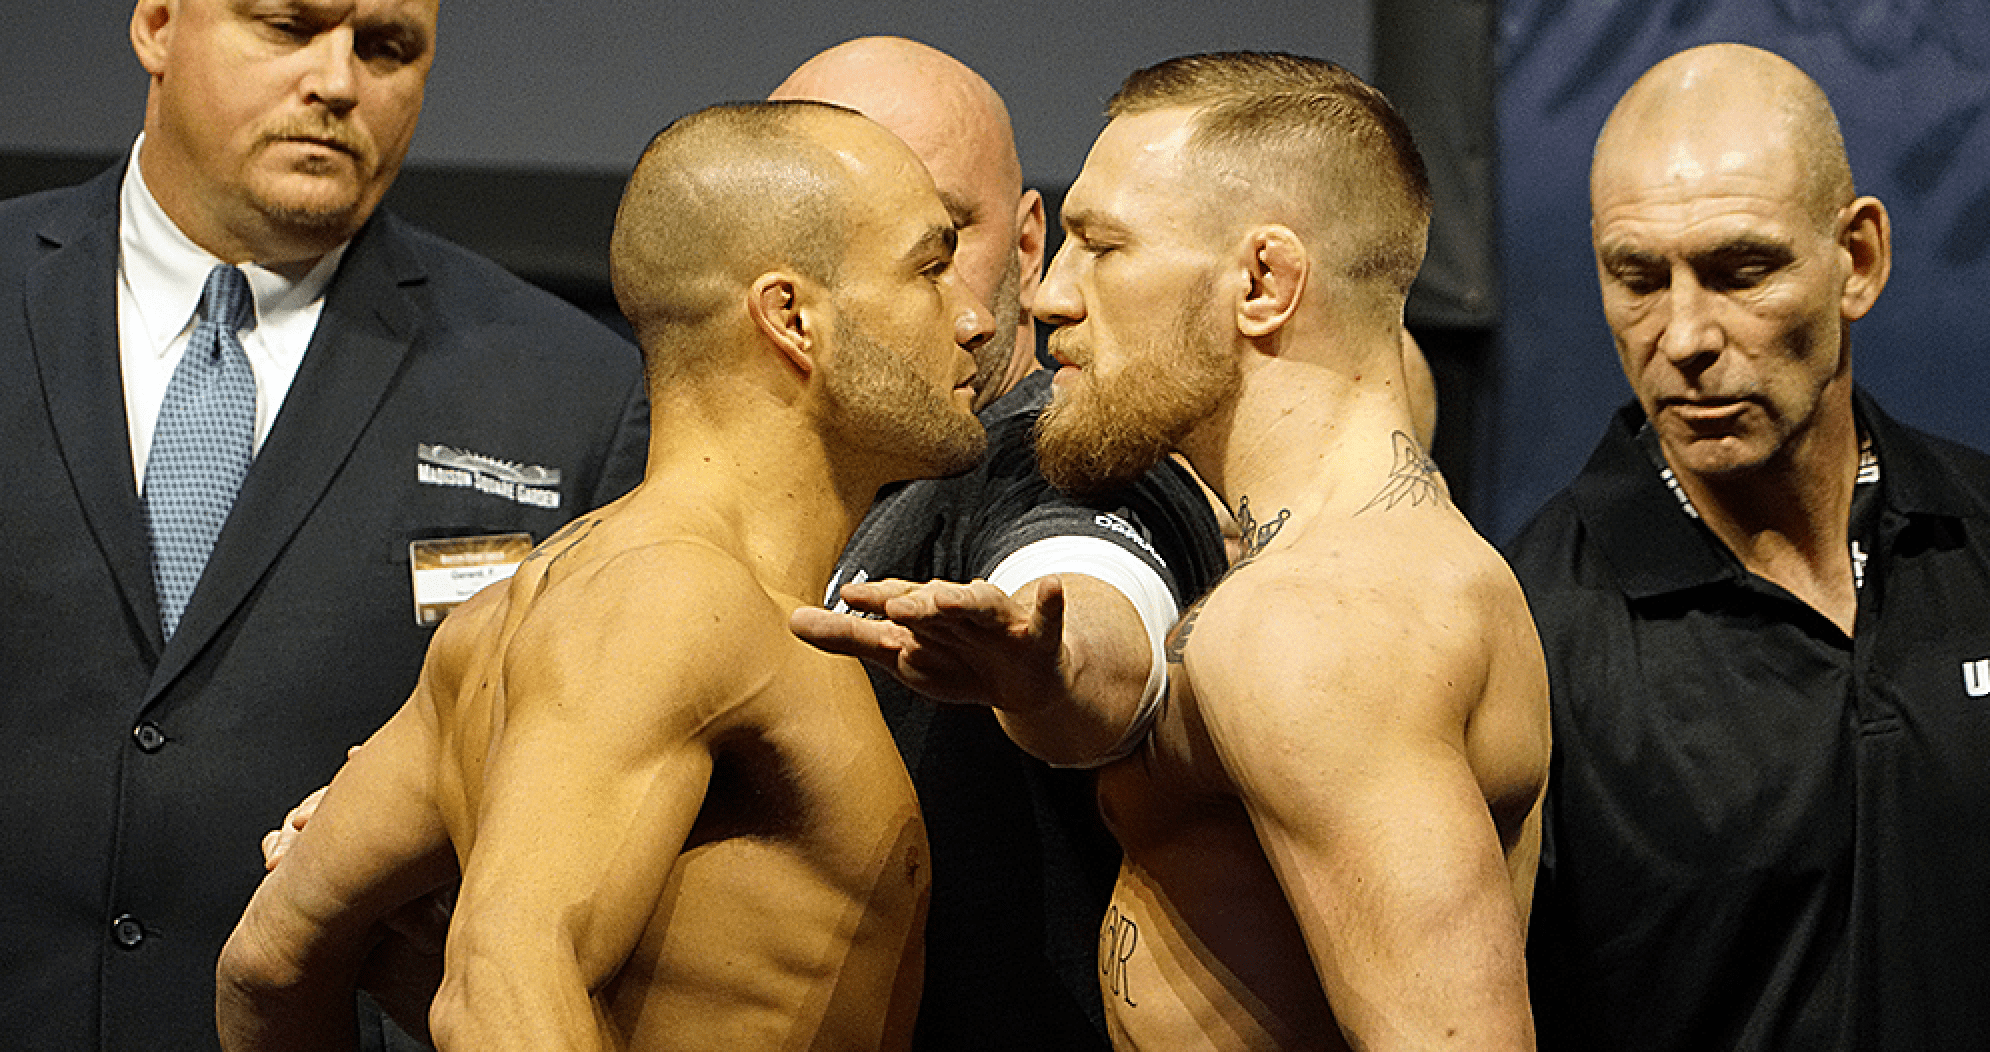 UFC 205: Eddie Alvarez vs Conor McGregor